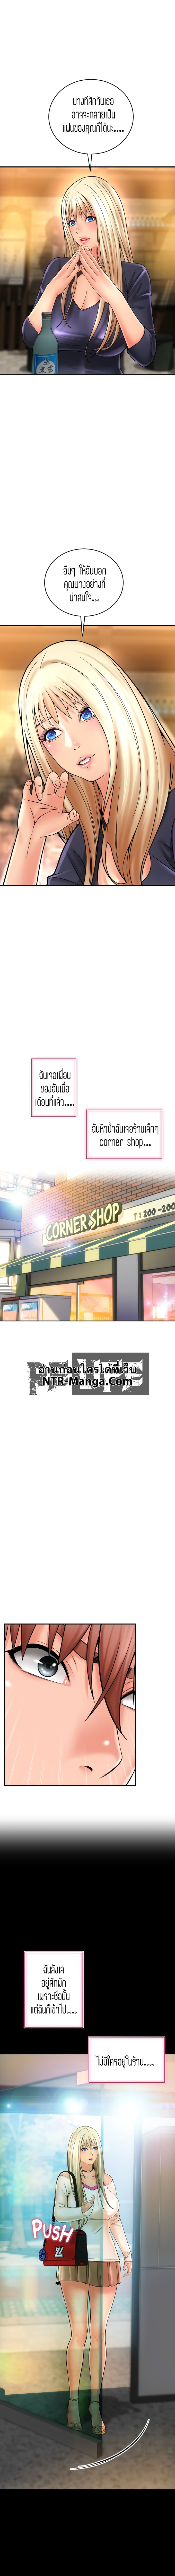 Corner Shop 19-19